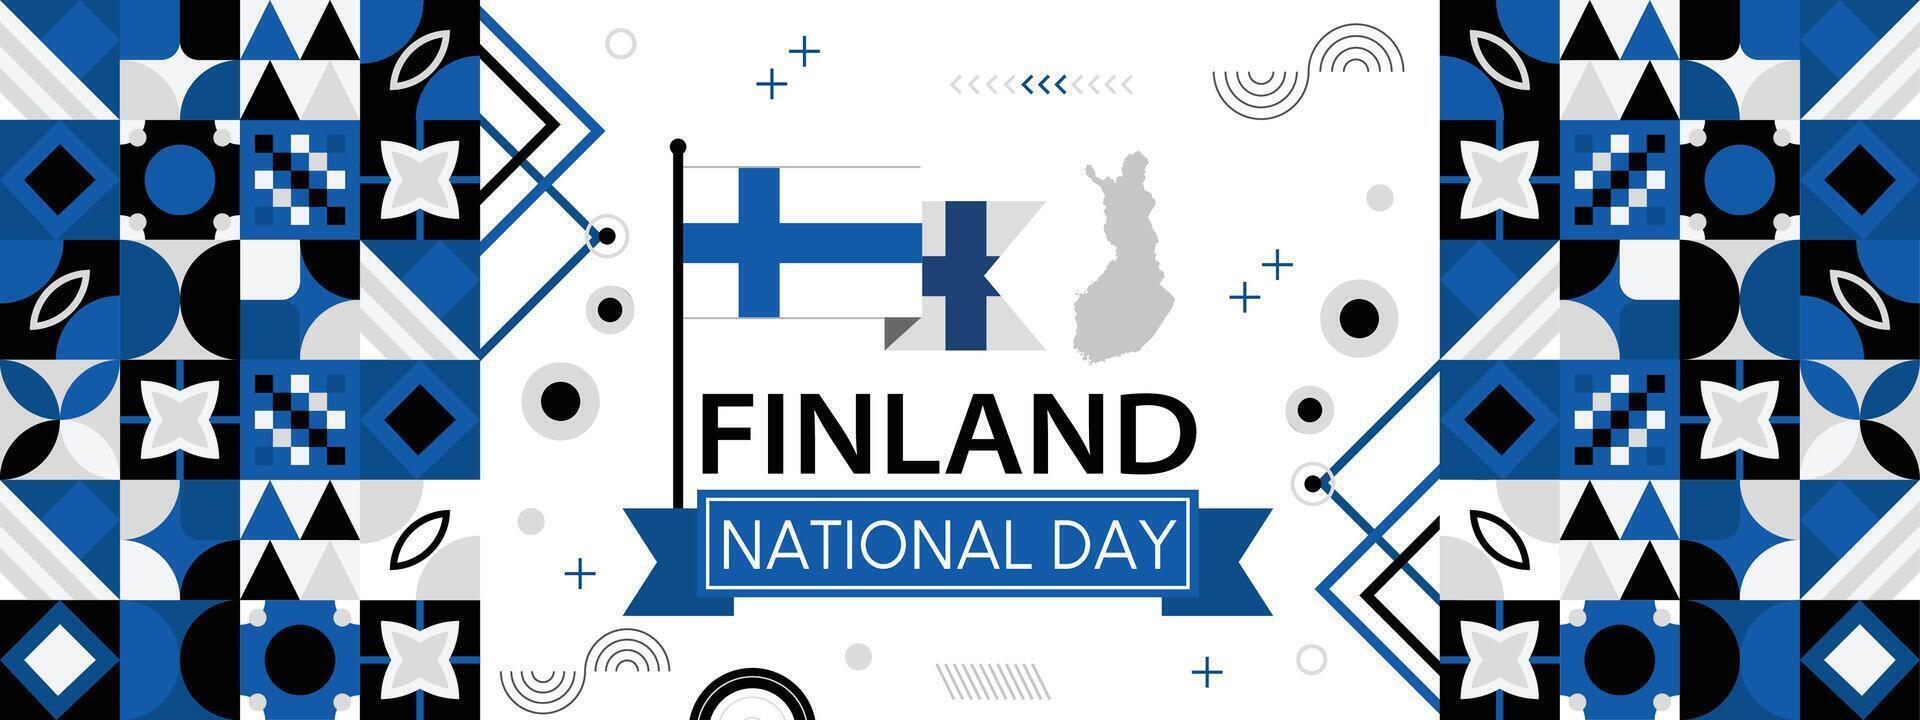 Finlândia nacional dia bandeira com mapa, bandeira cores tema fundo e geométrico abstrato retro moderno colorido Projeto vetor